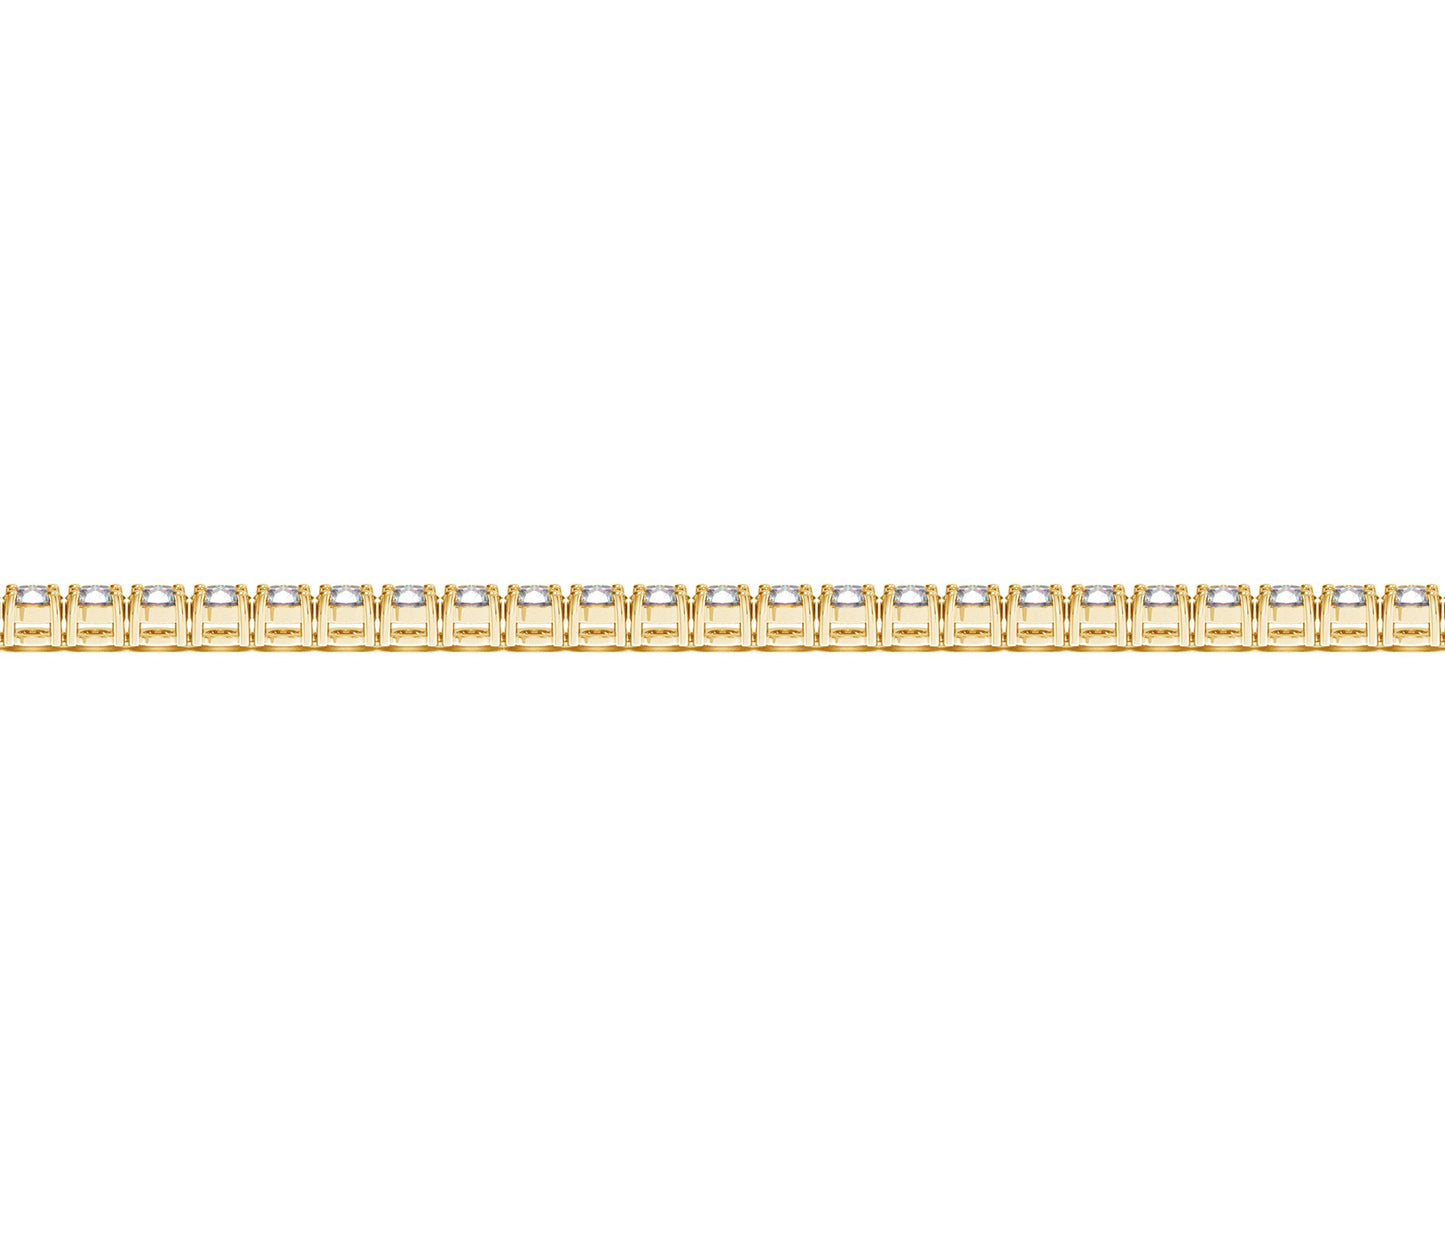 14k Yellow Gold Round Diamond Tennis Bracelet (2 cttw)